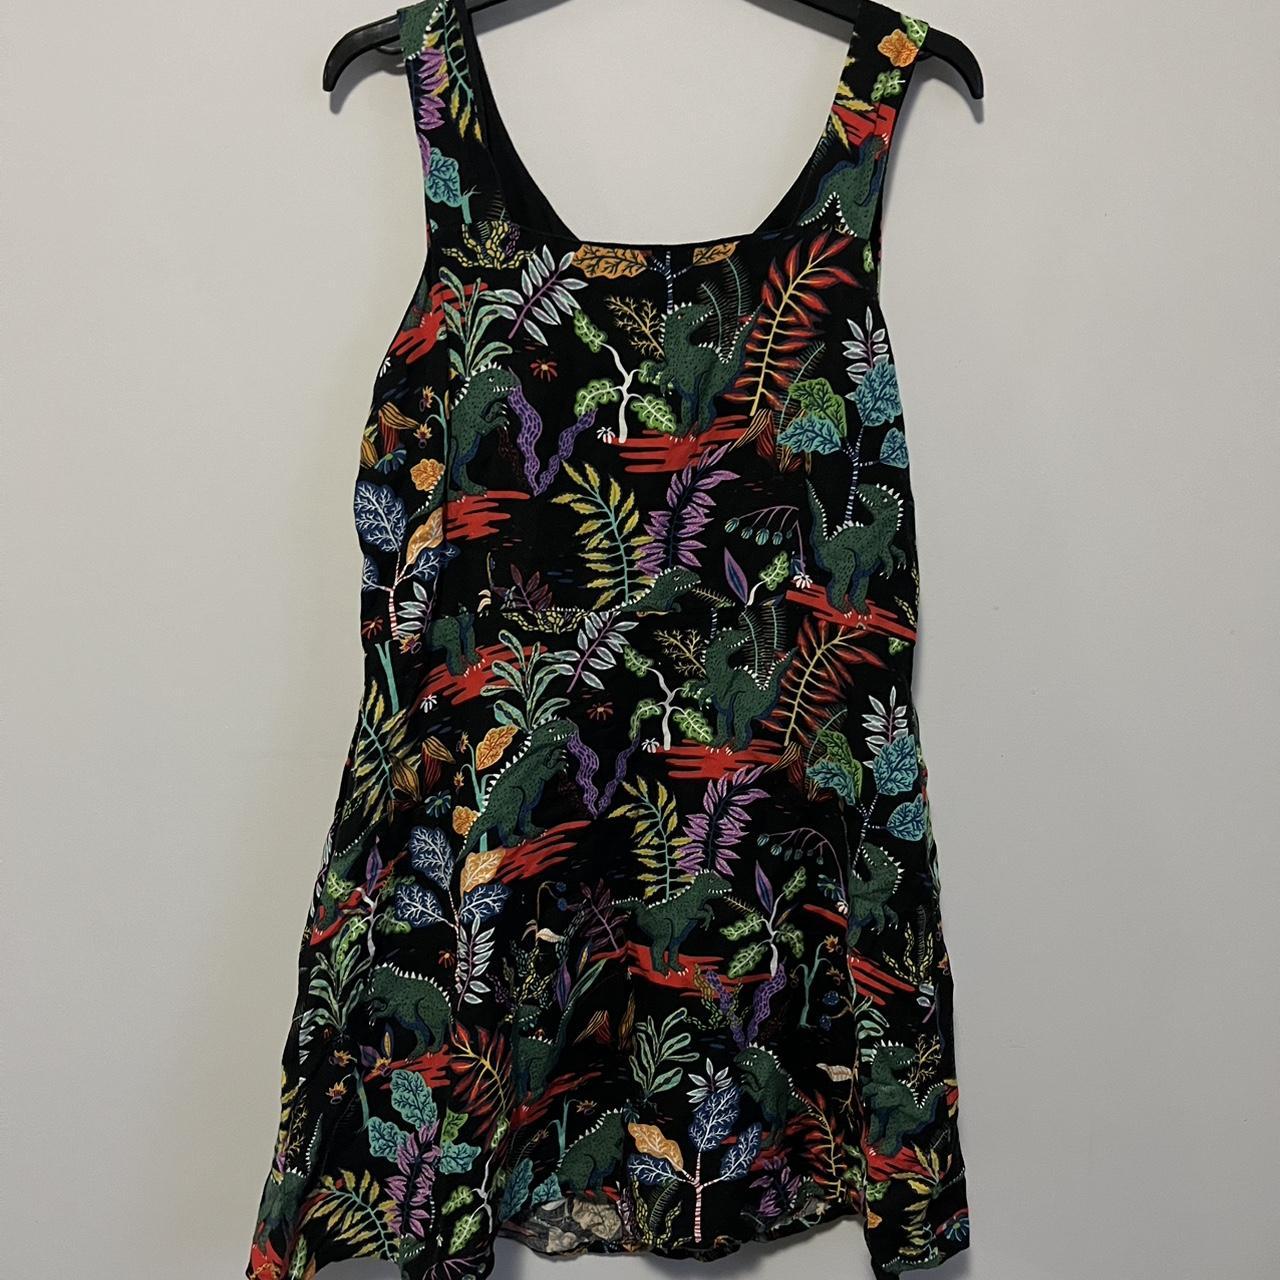 Dangerfield mini dress. Dinosaur print. Size... - Depop